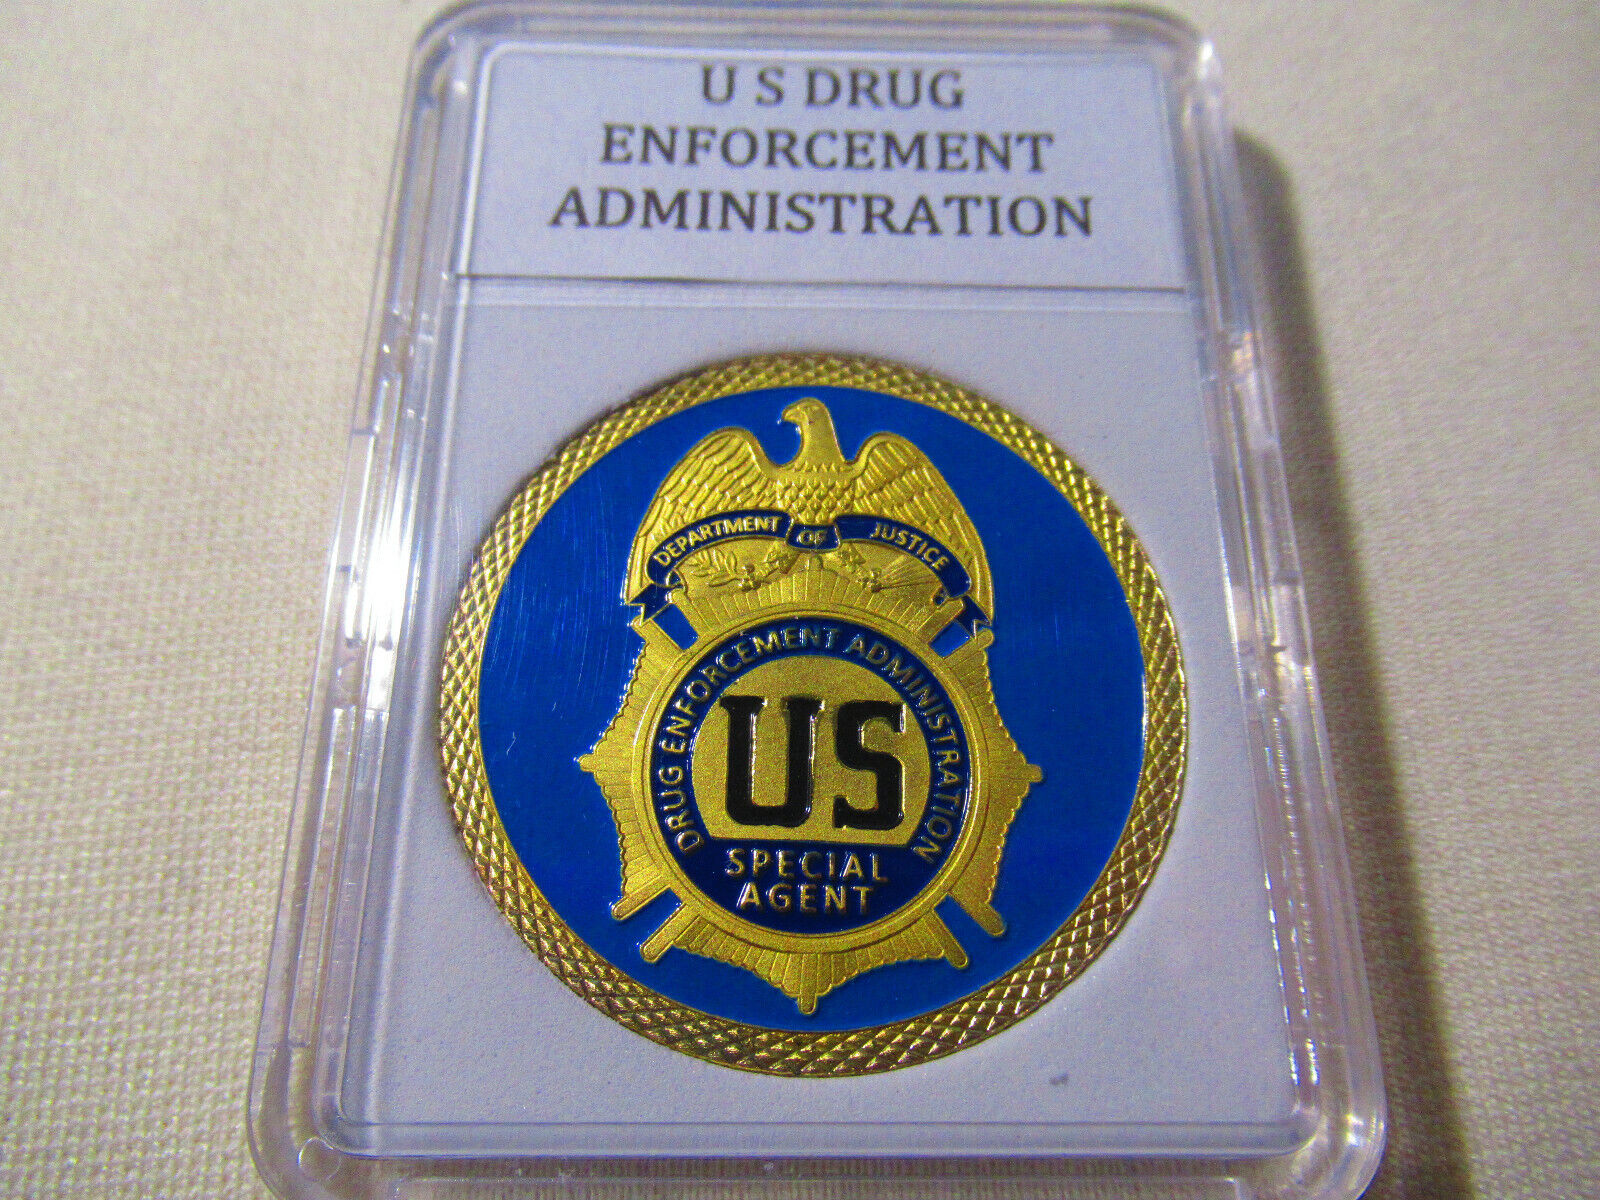 U S DRUG ENFORCEMENT ADMINISTRATION (DEA) Challenge Coin